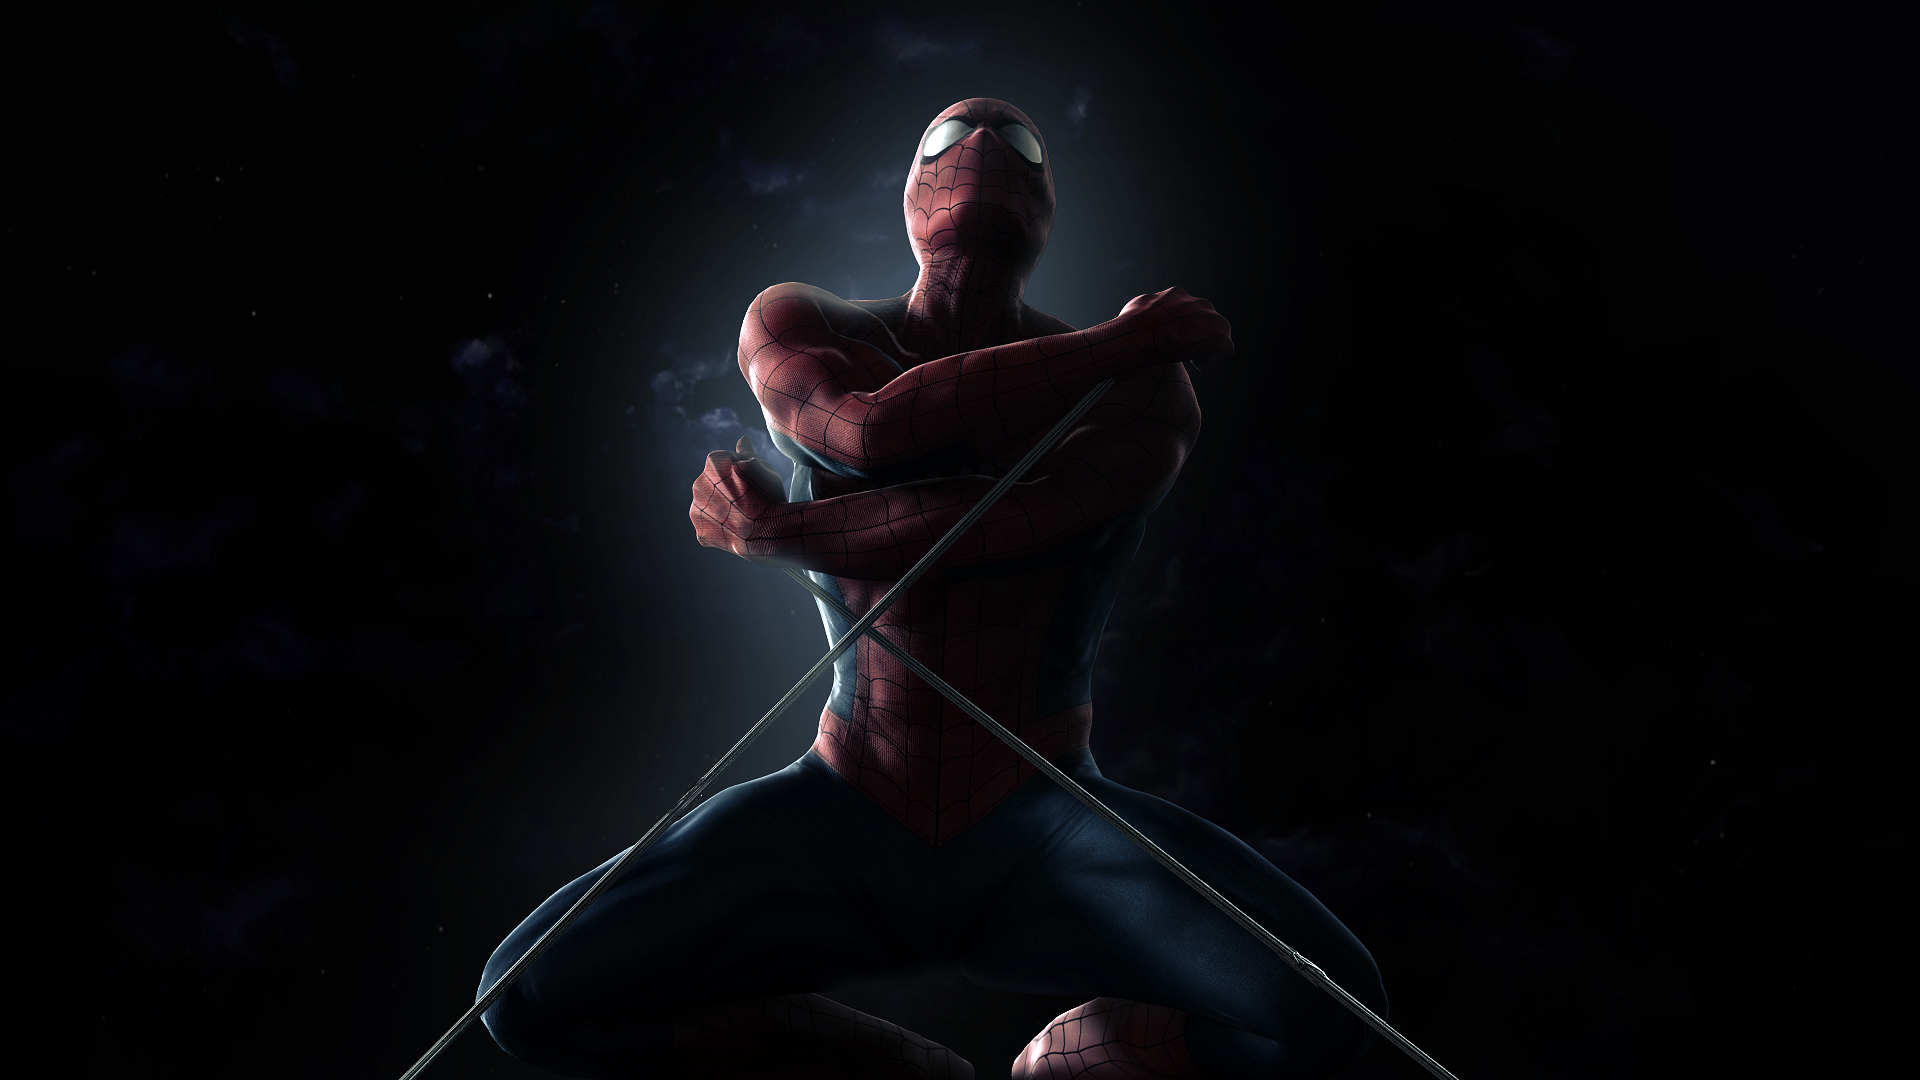 Spiderman 3D Movies Wallpaper Free Download Wallpaper High resolution